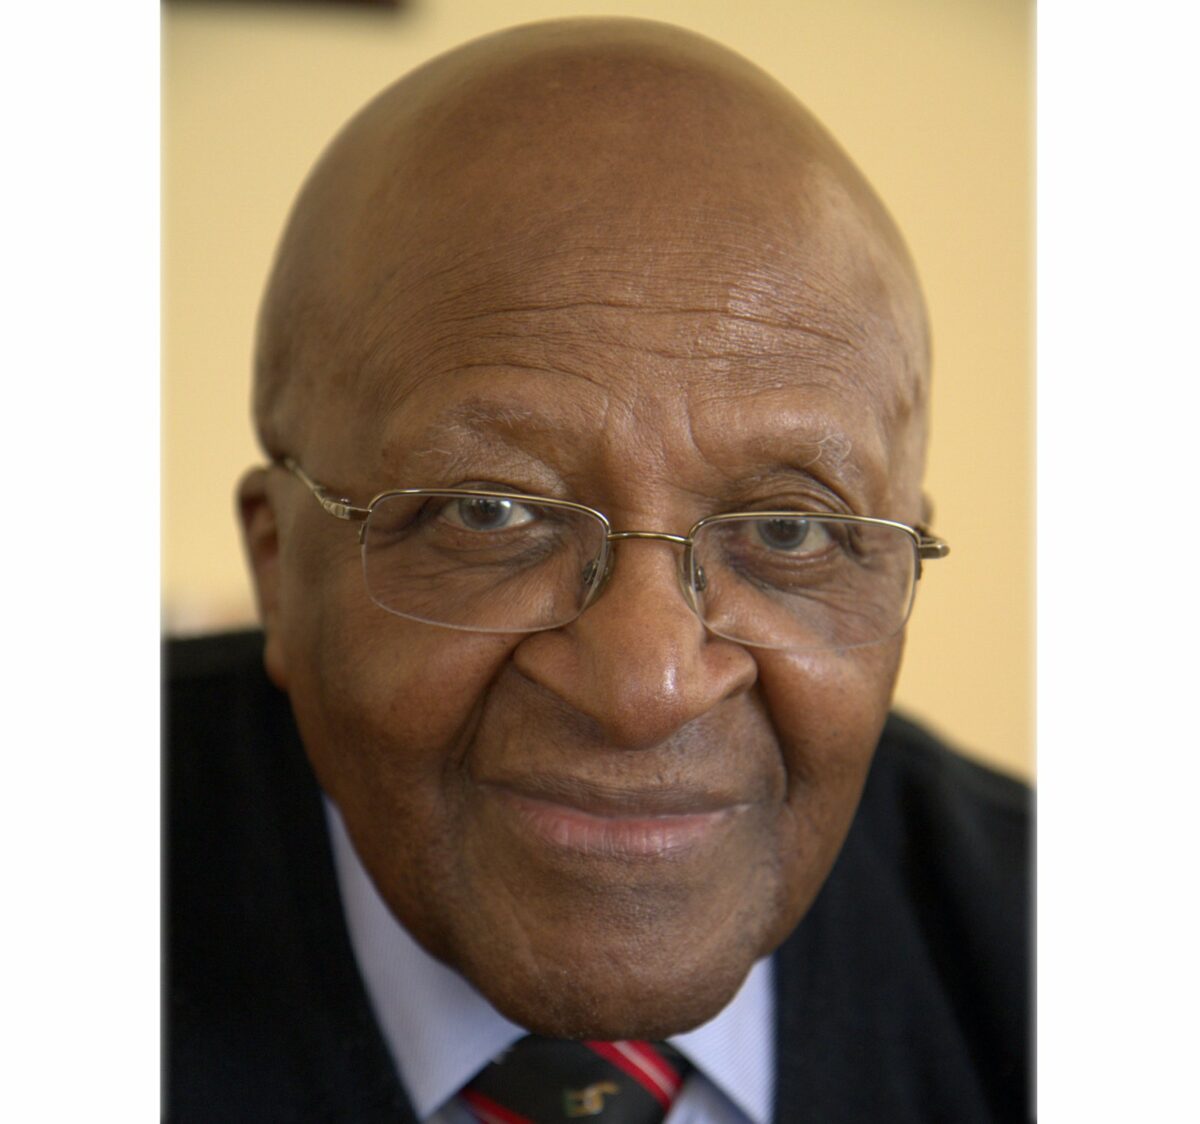 Archbishop Emeritus of Cape Town - Desmond Tutu, by Libris Förlag. https://commons.wikimedia.org/w/index.php?curid=36964977.